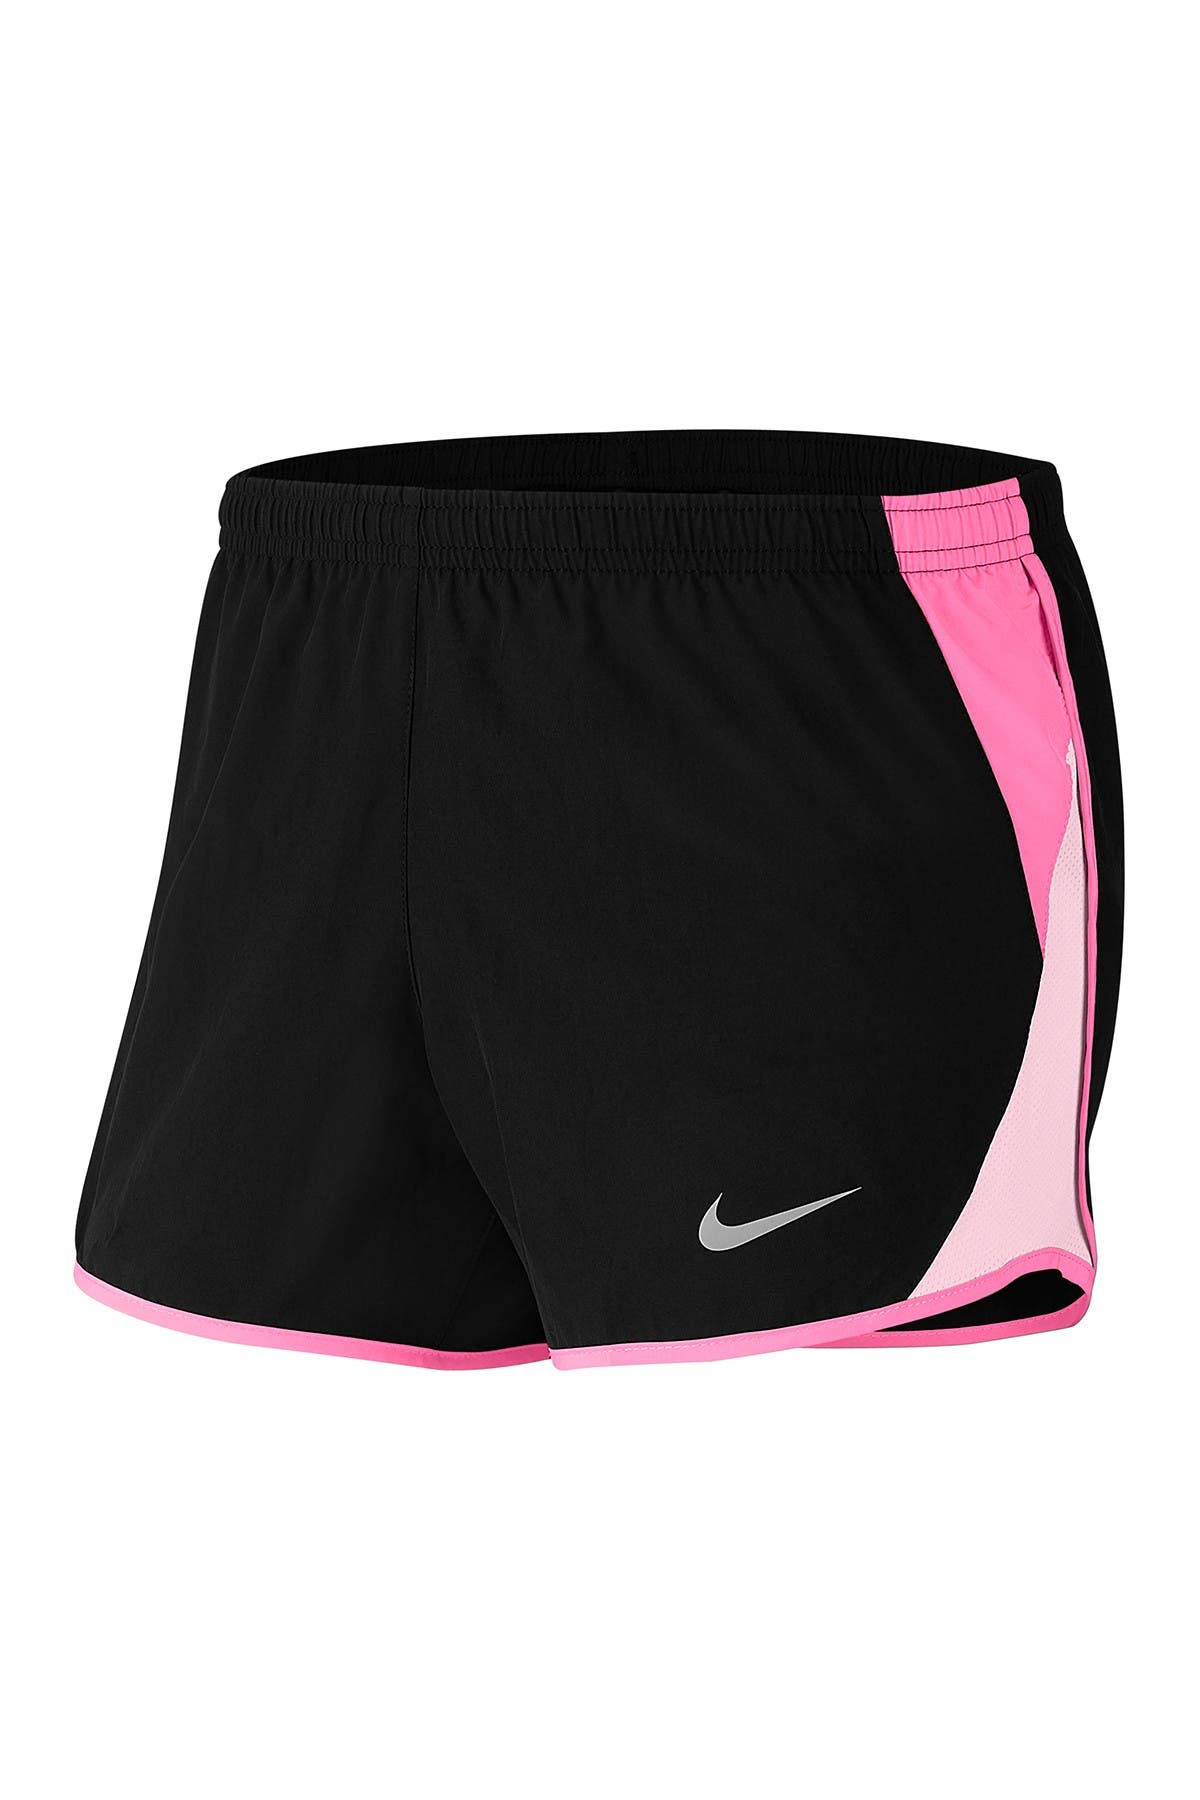 Nike Activewear for Women | Nordstrom Rack